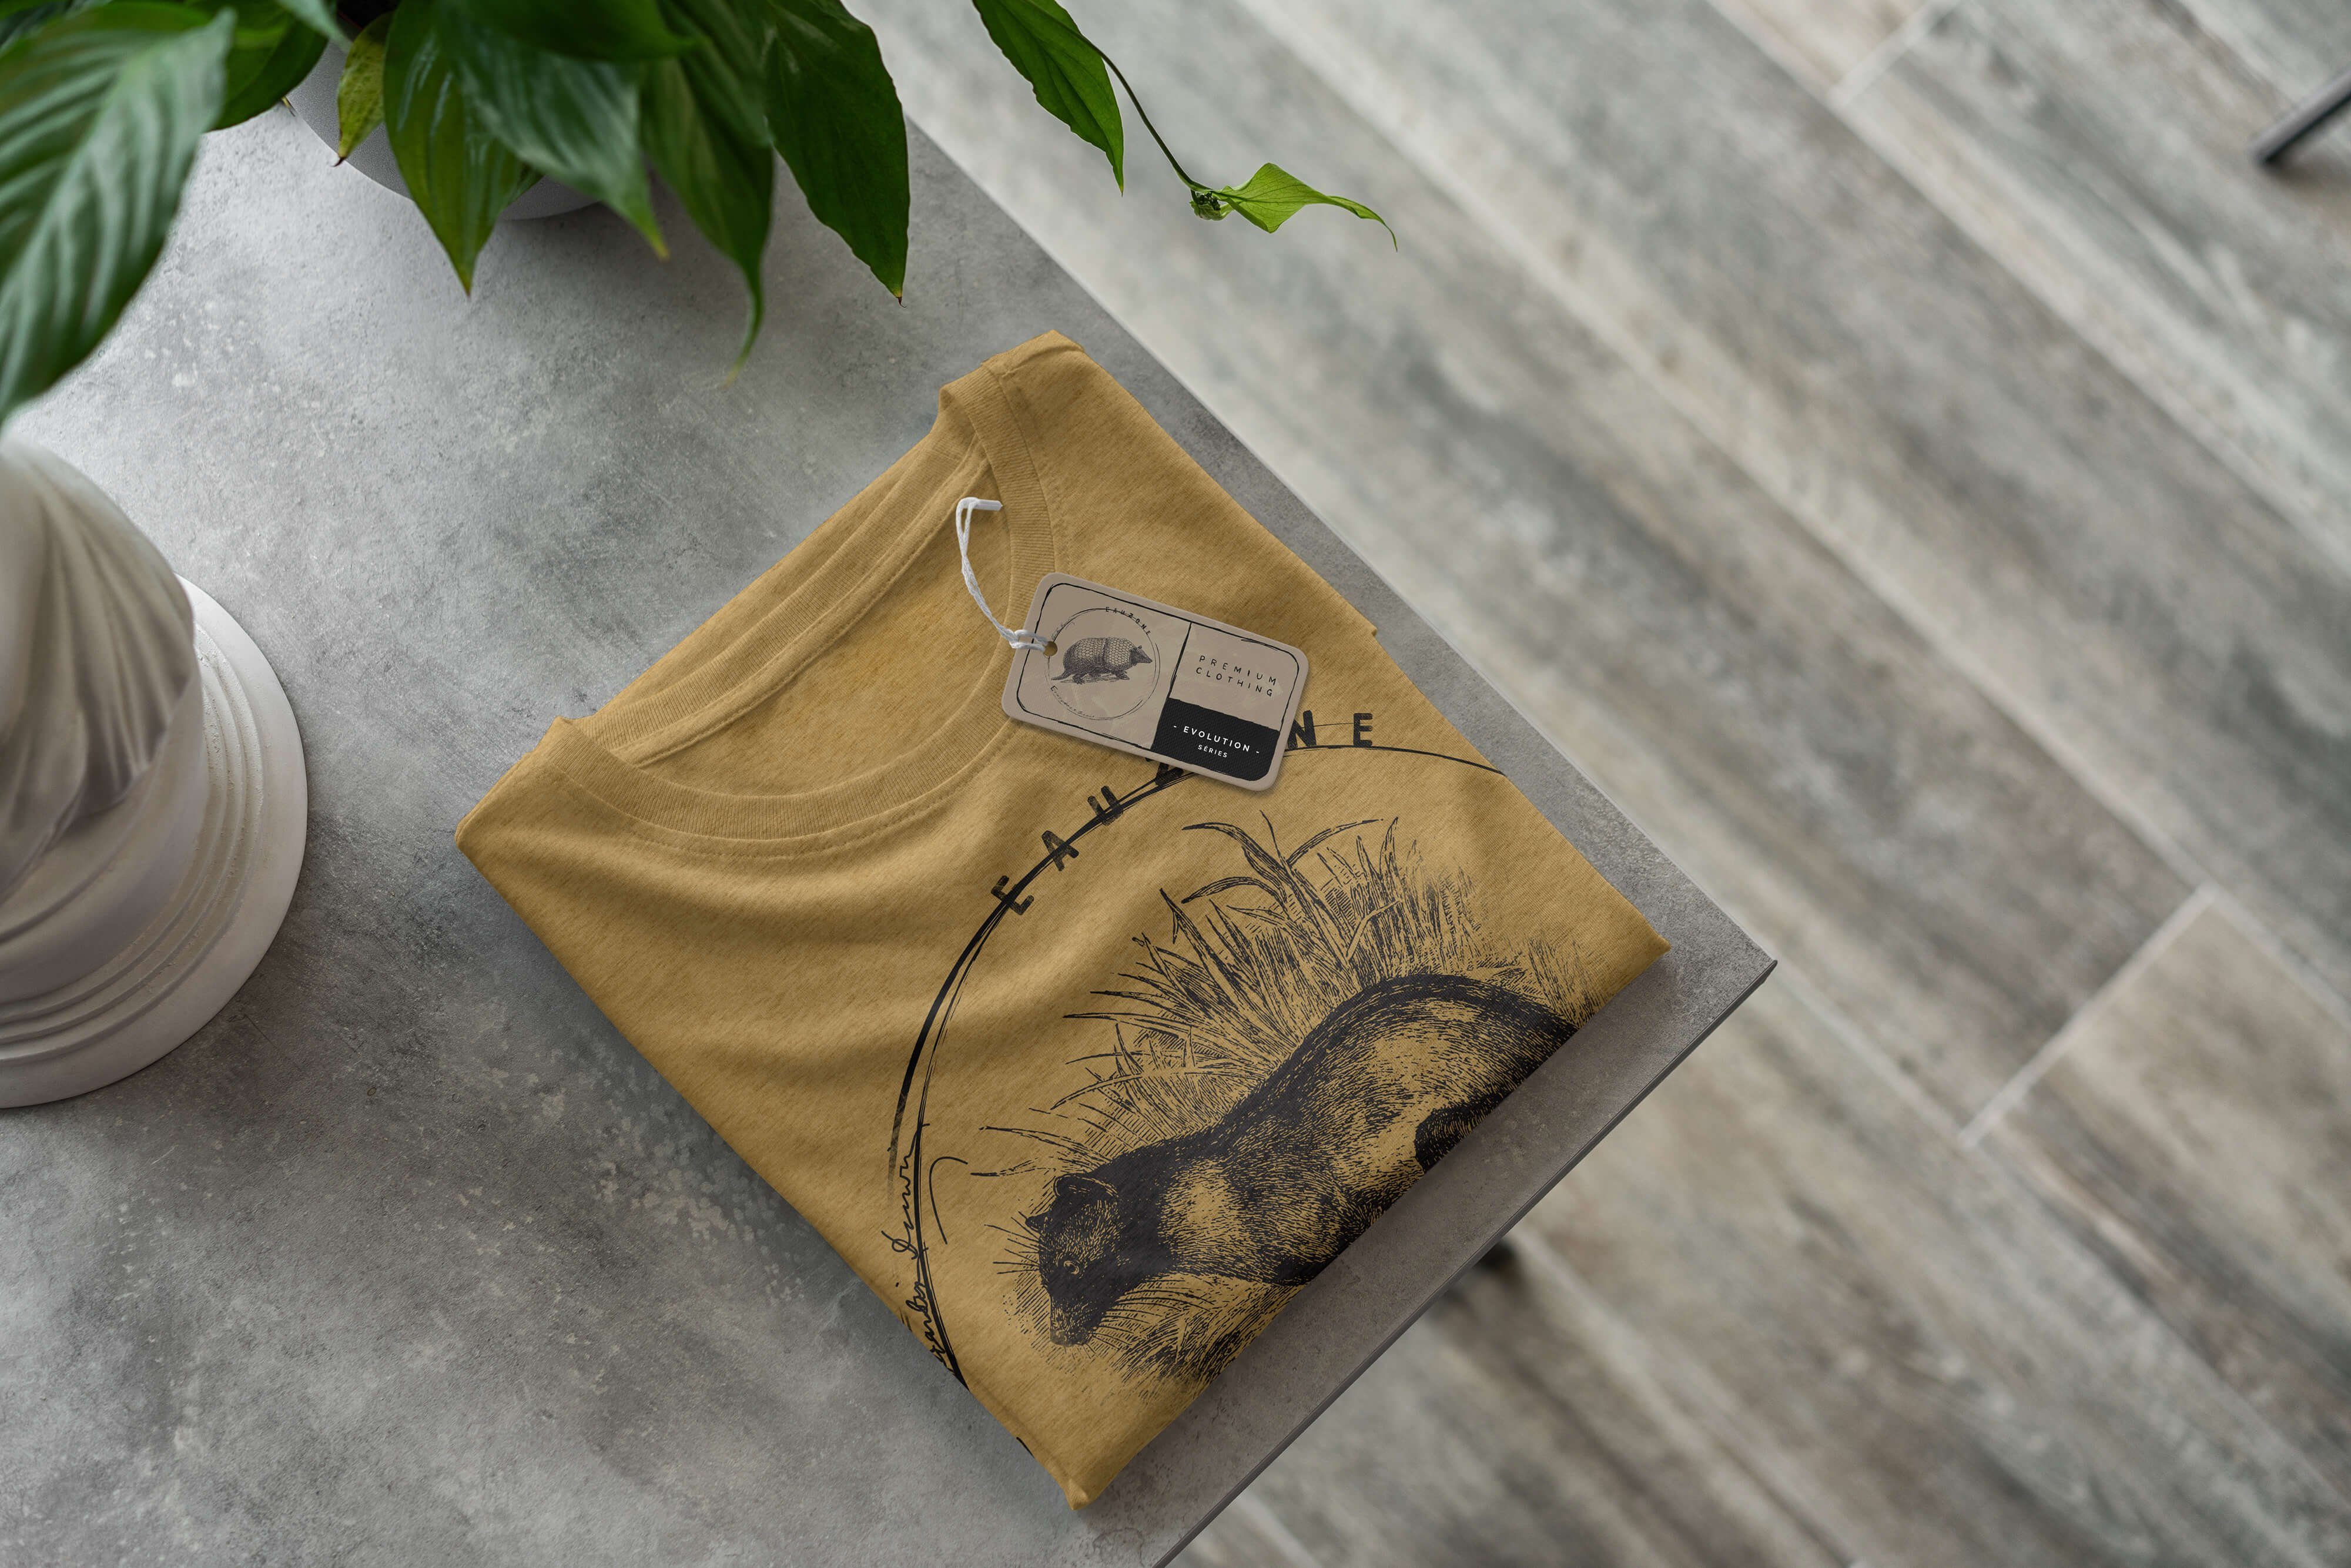 Sinus Art T-Shirt Evolution Herren Arctogale Gold Antique T-Shirt